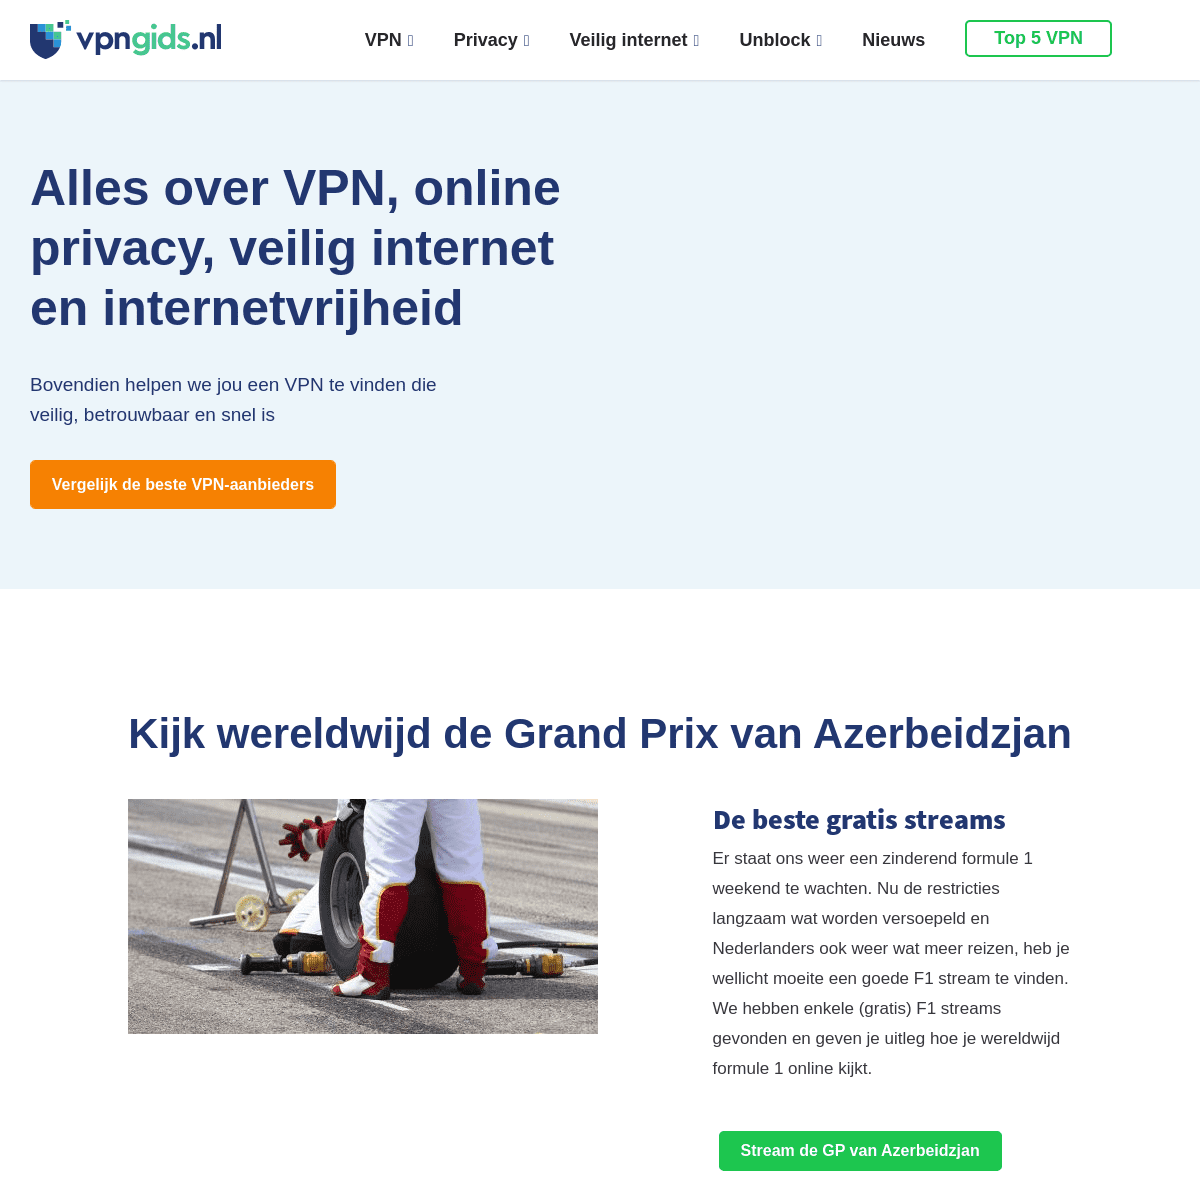 VPNGids.nl - Nieuws en reviews, online privacy en internetveiligheid